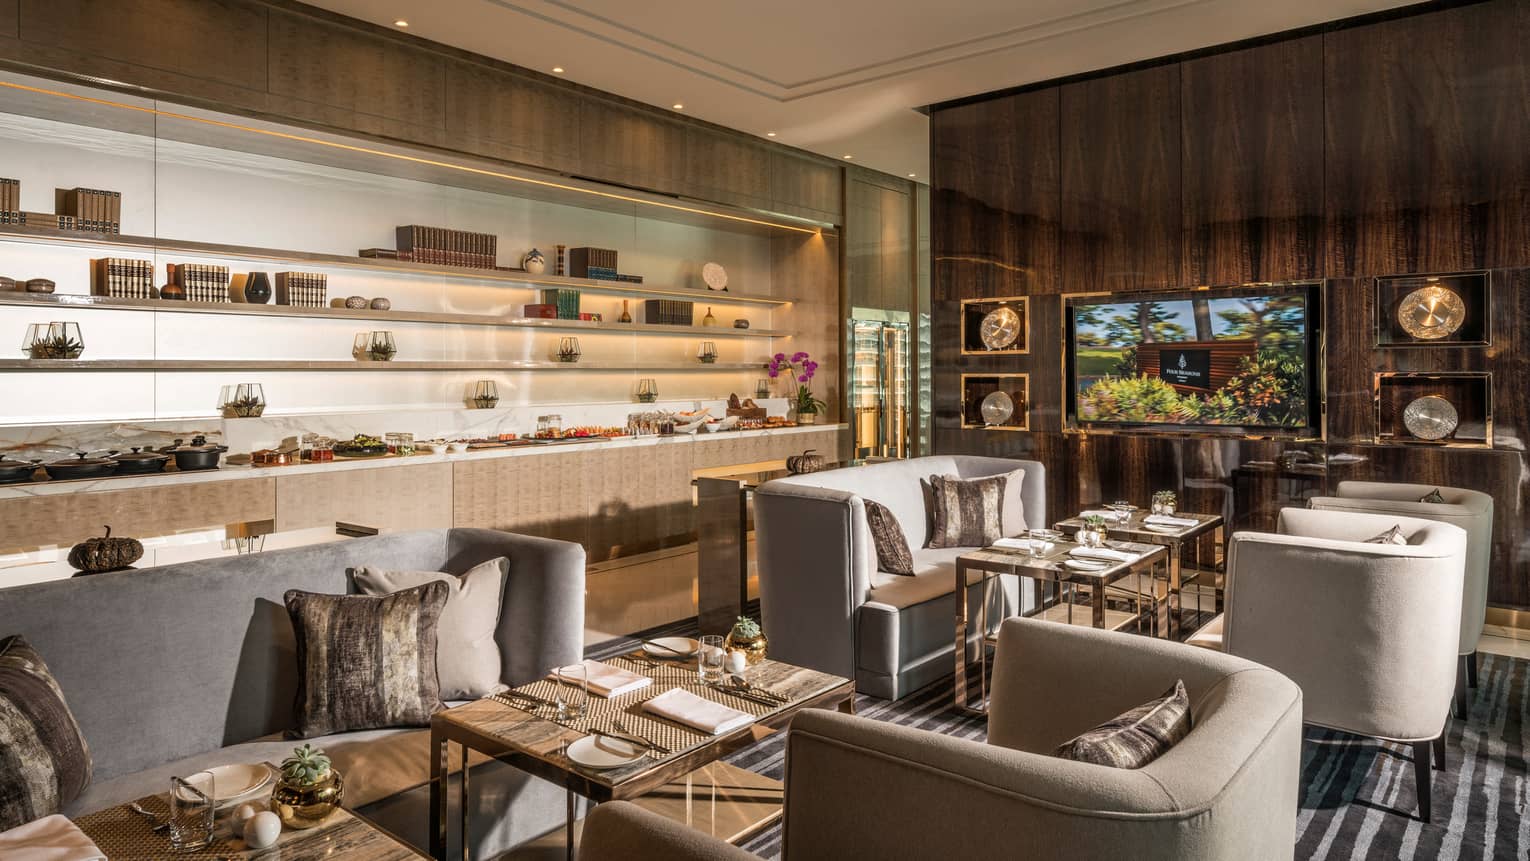 The Executive Club at Four Seasons Hotel Kuala Lumpur offers sleek seats and views of KLCC Park